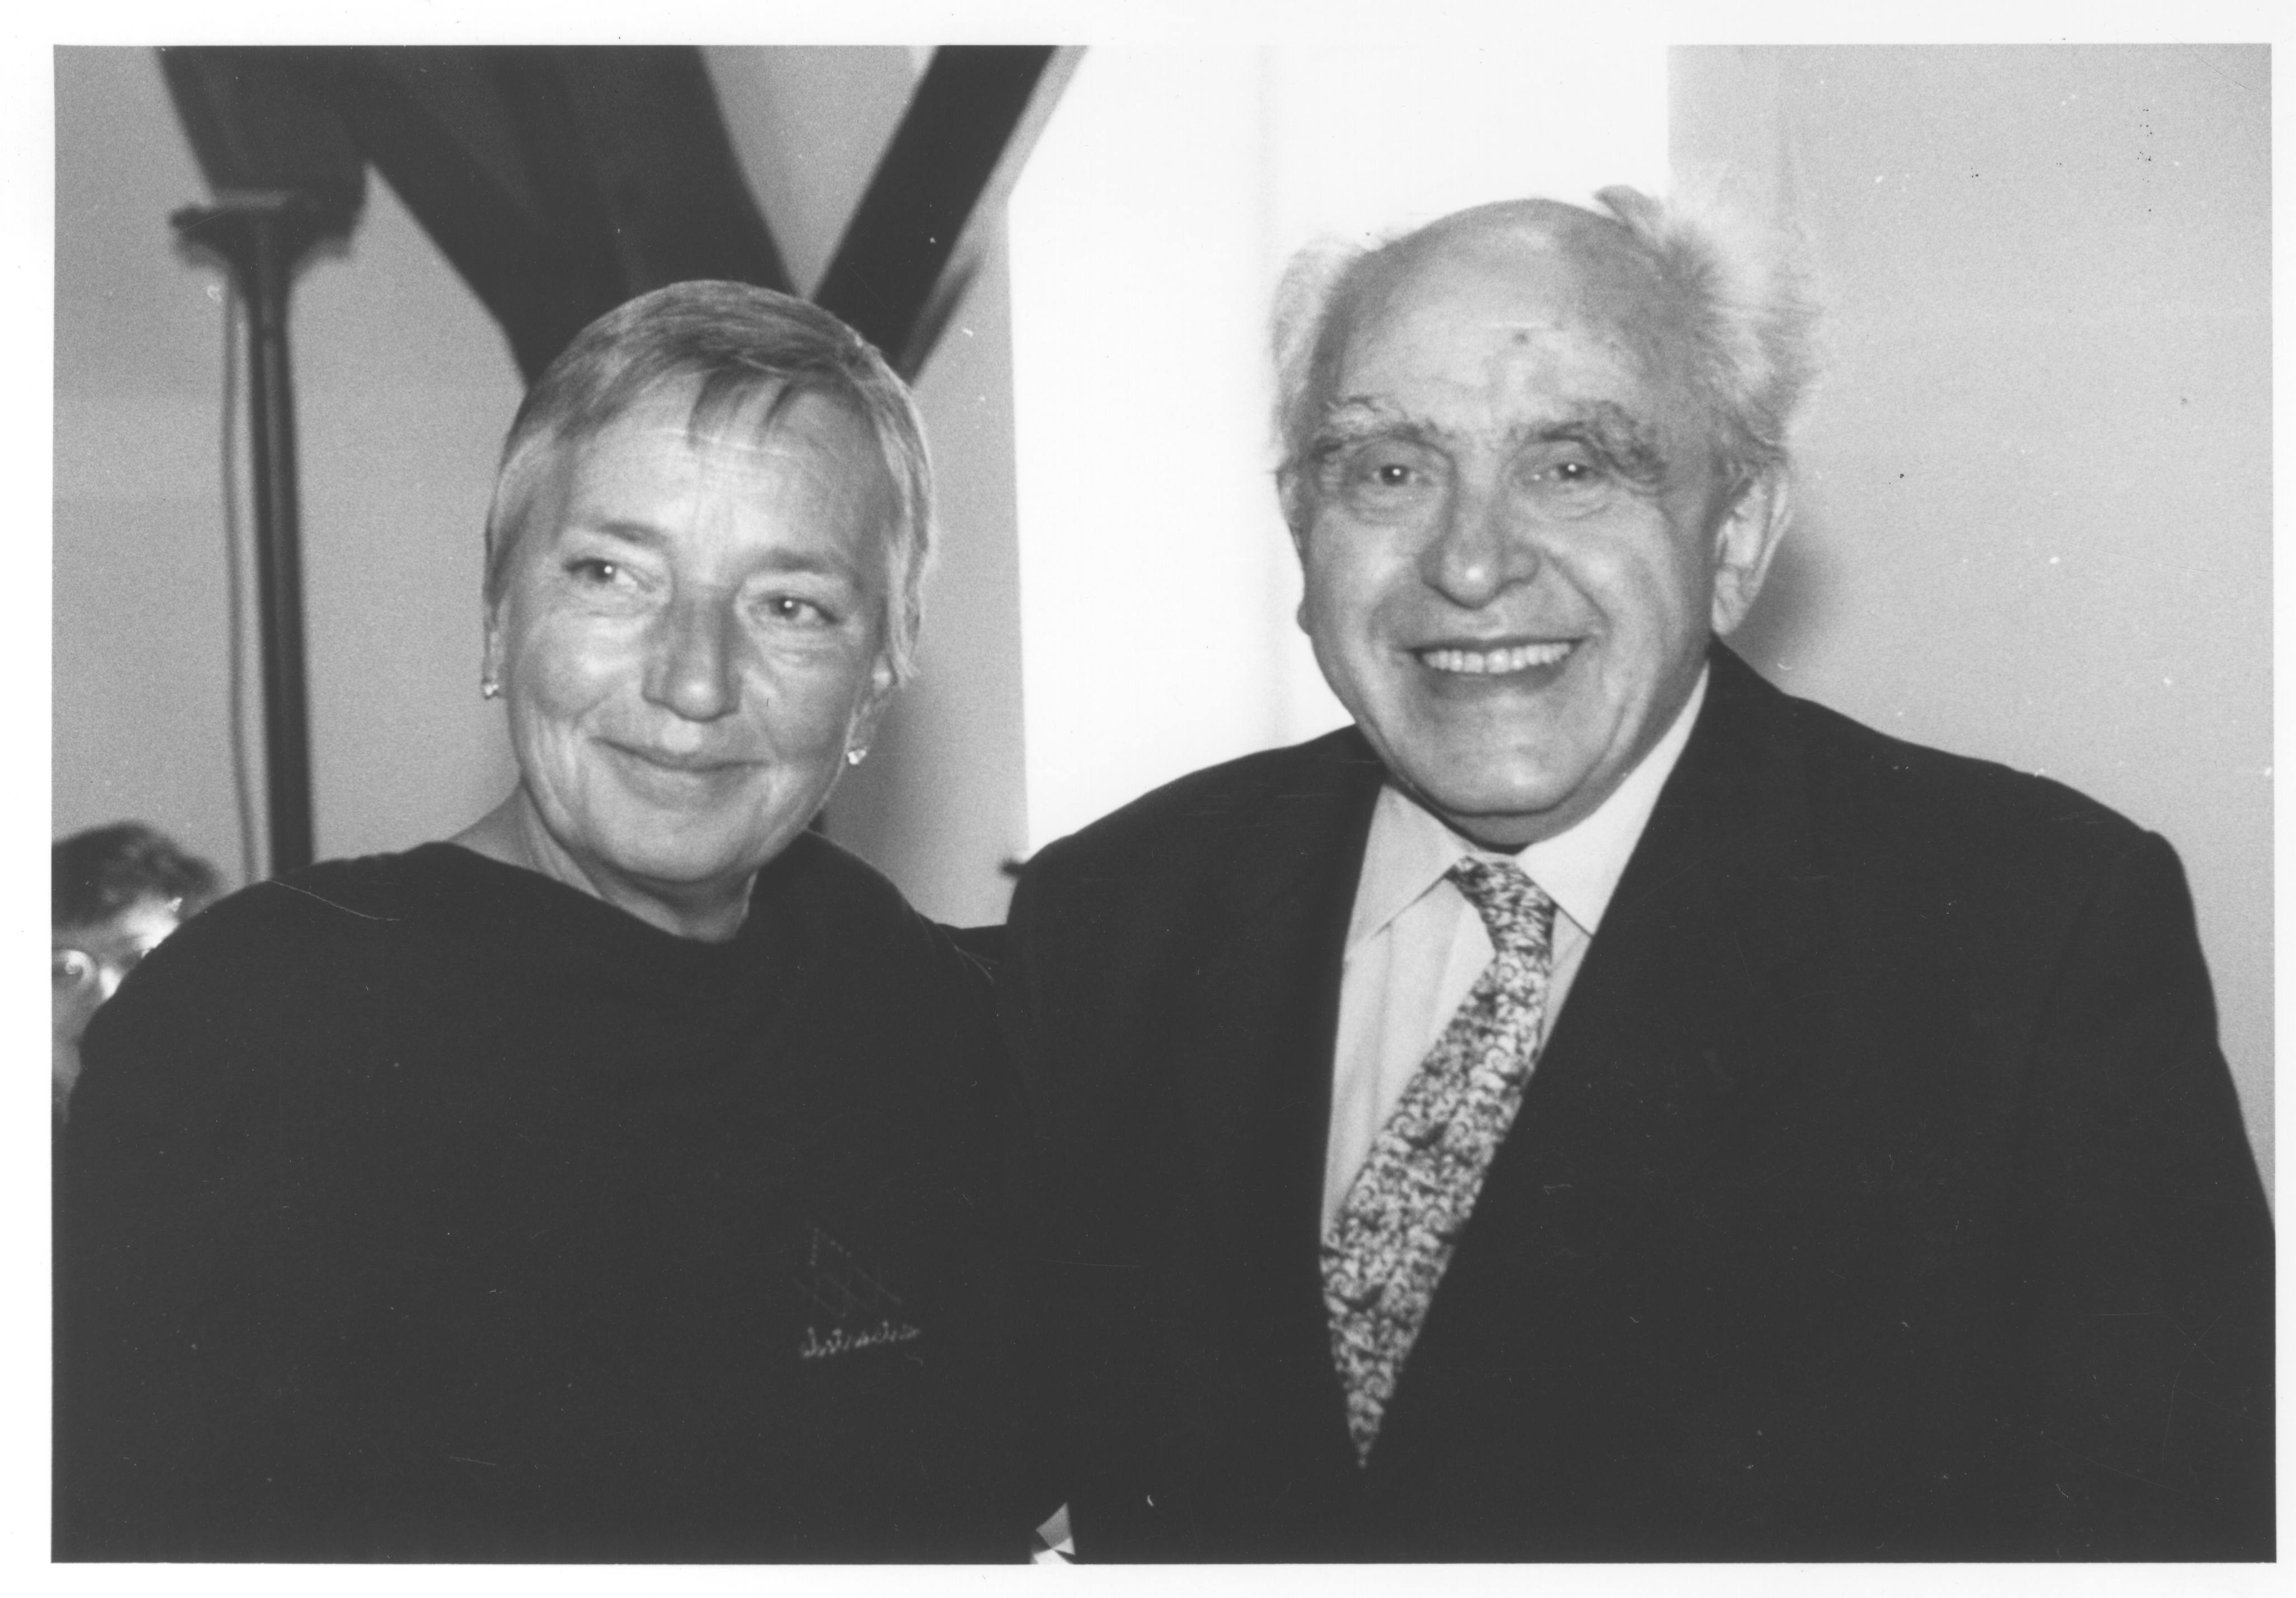 
					
						José Ensch und Edmond Israel, Prix Servais 1998
					
					
					© Collection CNL
					